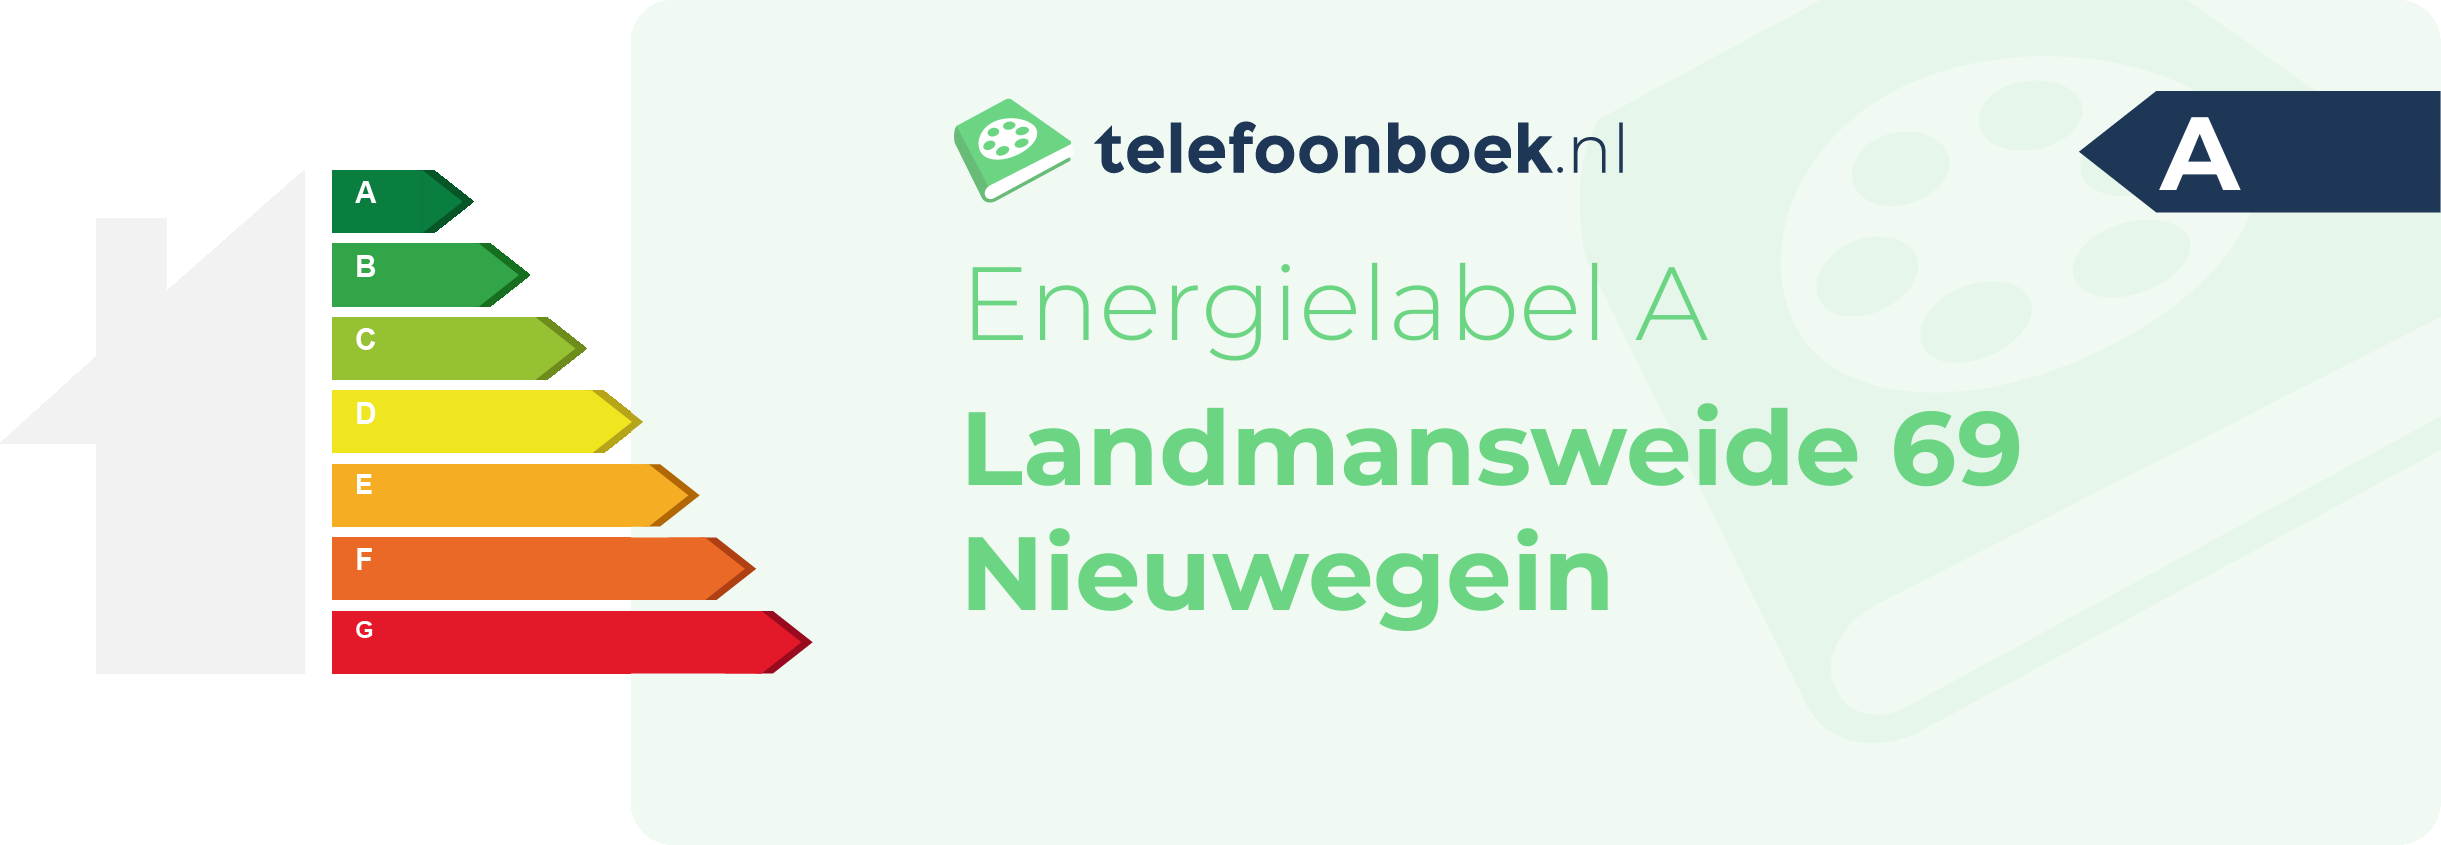 Energielabel Landmansweide 69 Nieuwegein